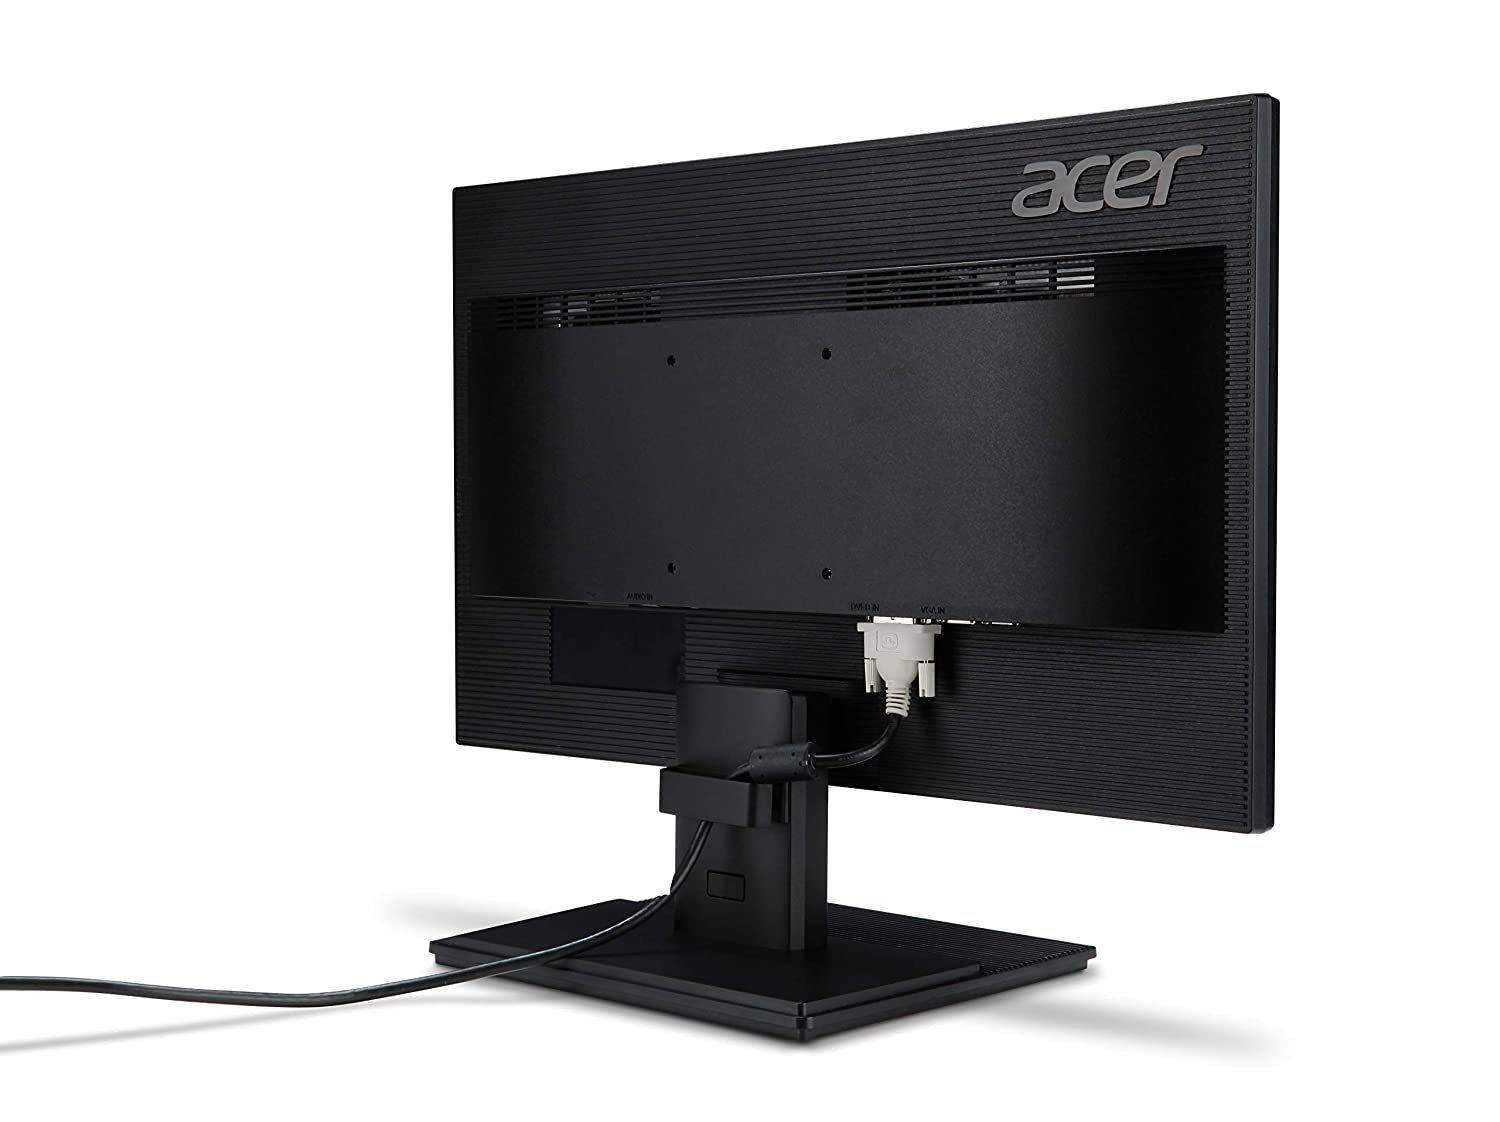 Acer Monitor (V206HQL) (19.5" Display || HD LED Backlit || HDMI, VGA Ports and Stereo Speakers )